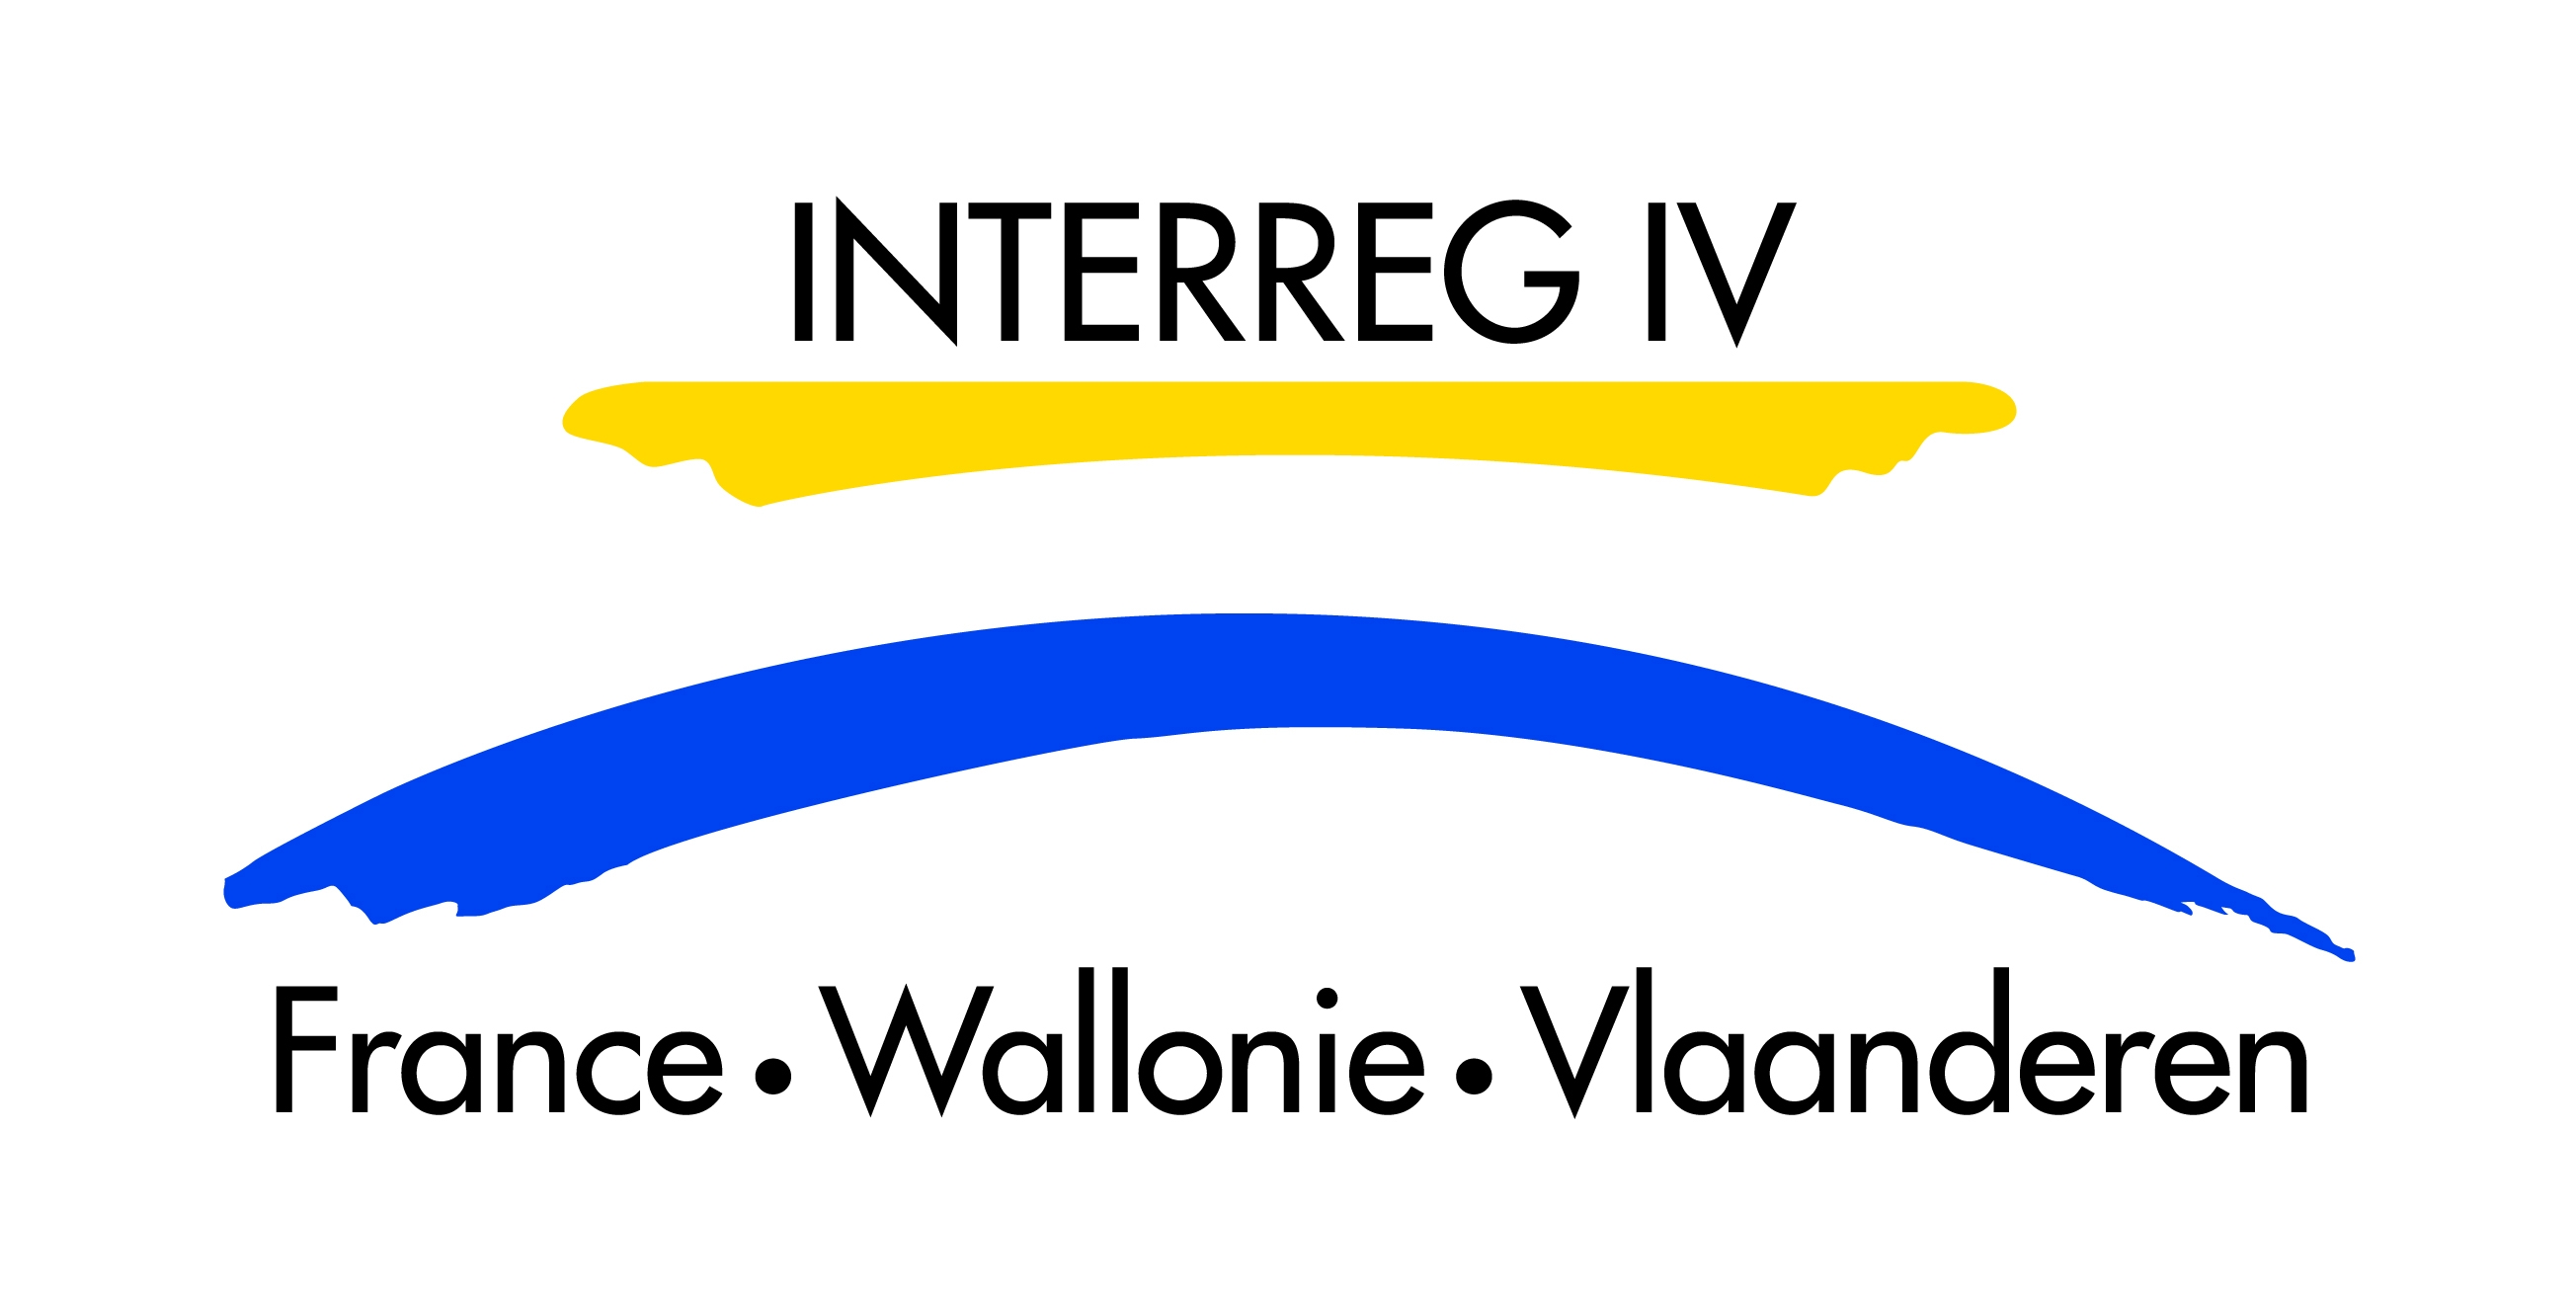 INTERREG IV